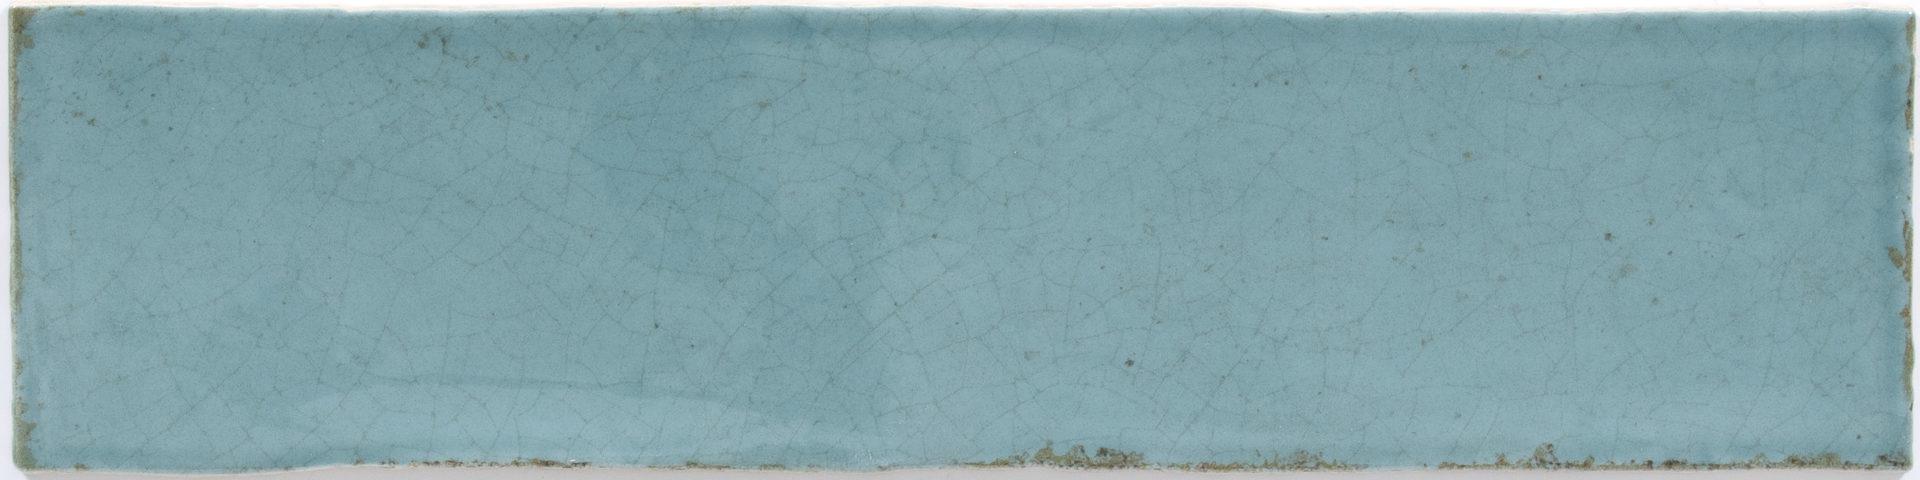 Maiolica Blue Steel Crackled 3x12 Ceramic  Tile